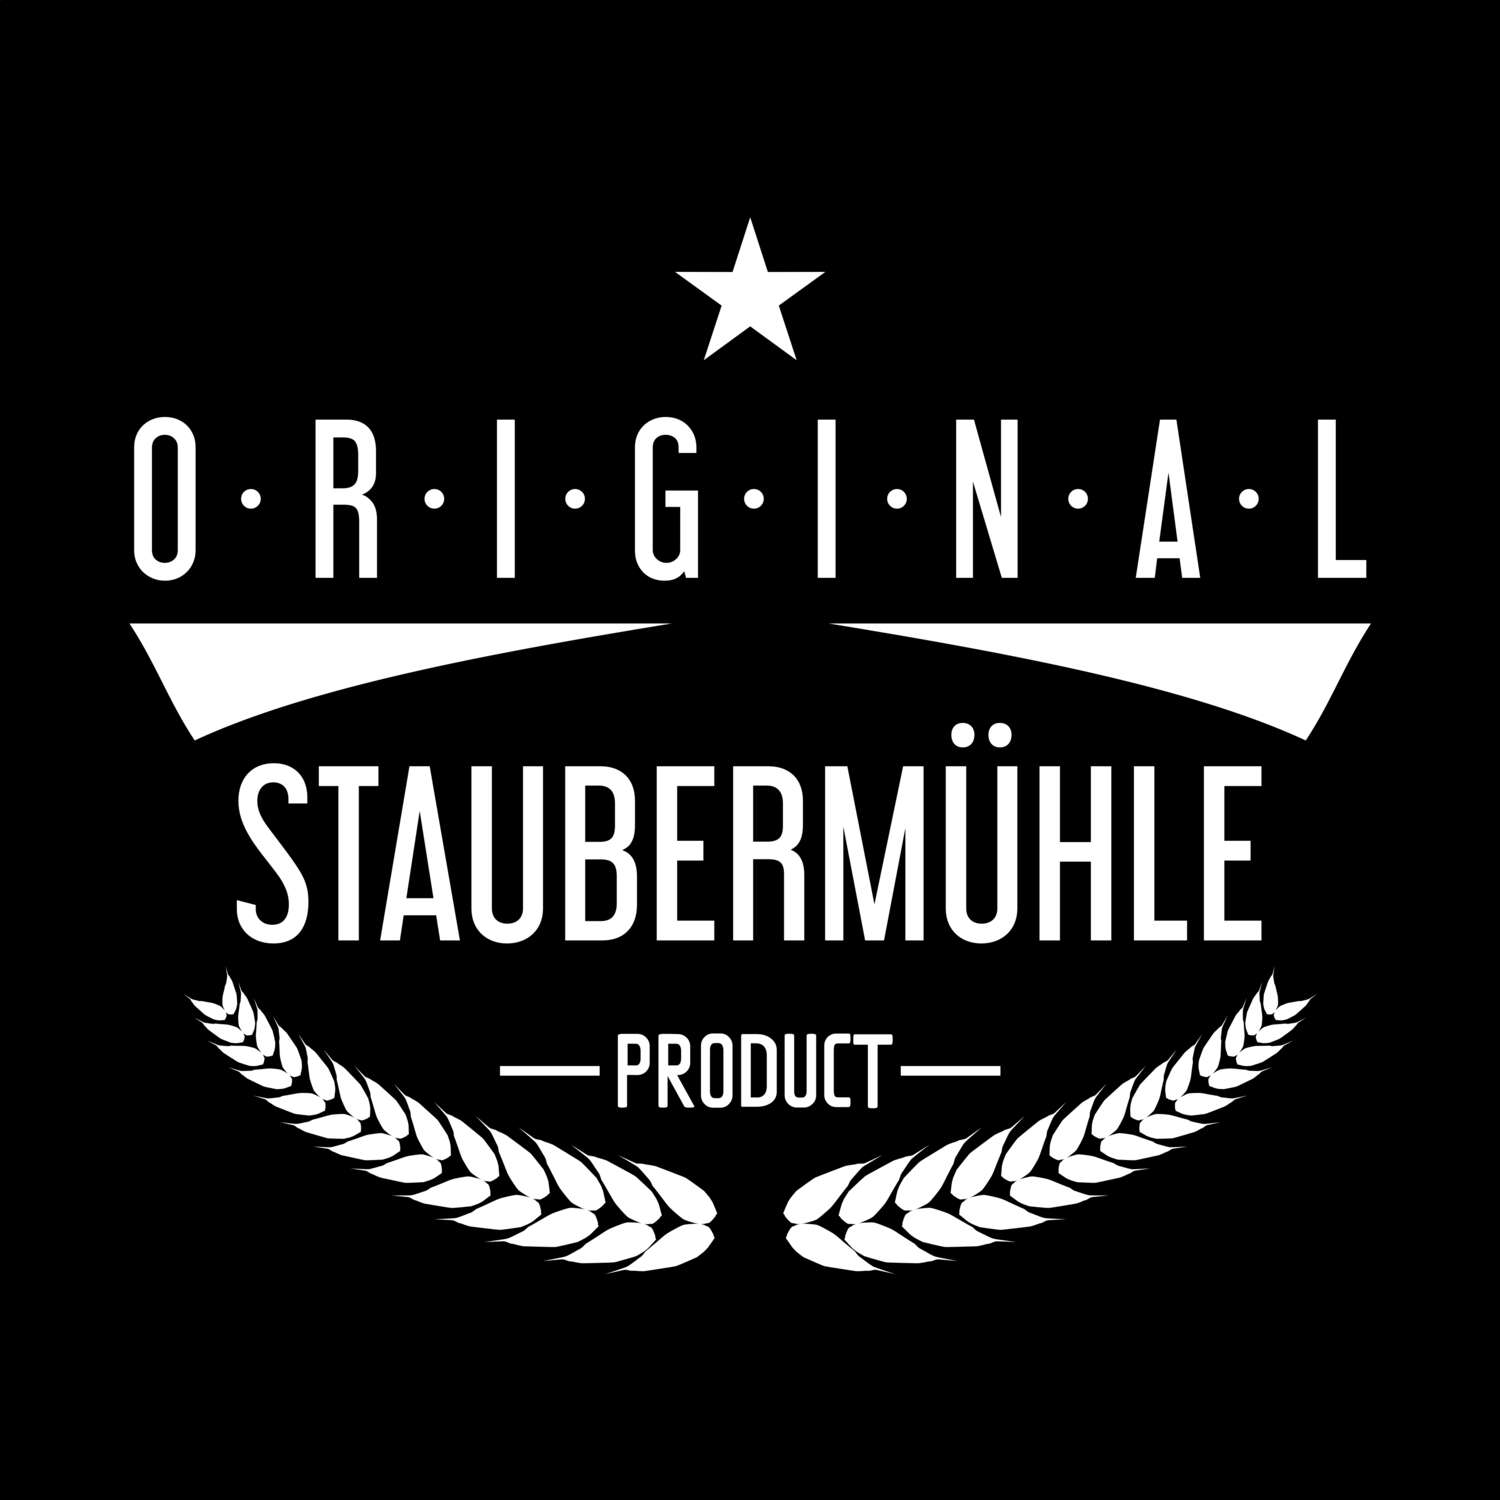 Staubermühle T-Shirt »Original Product«